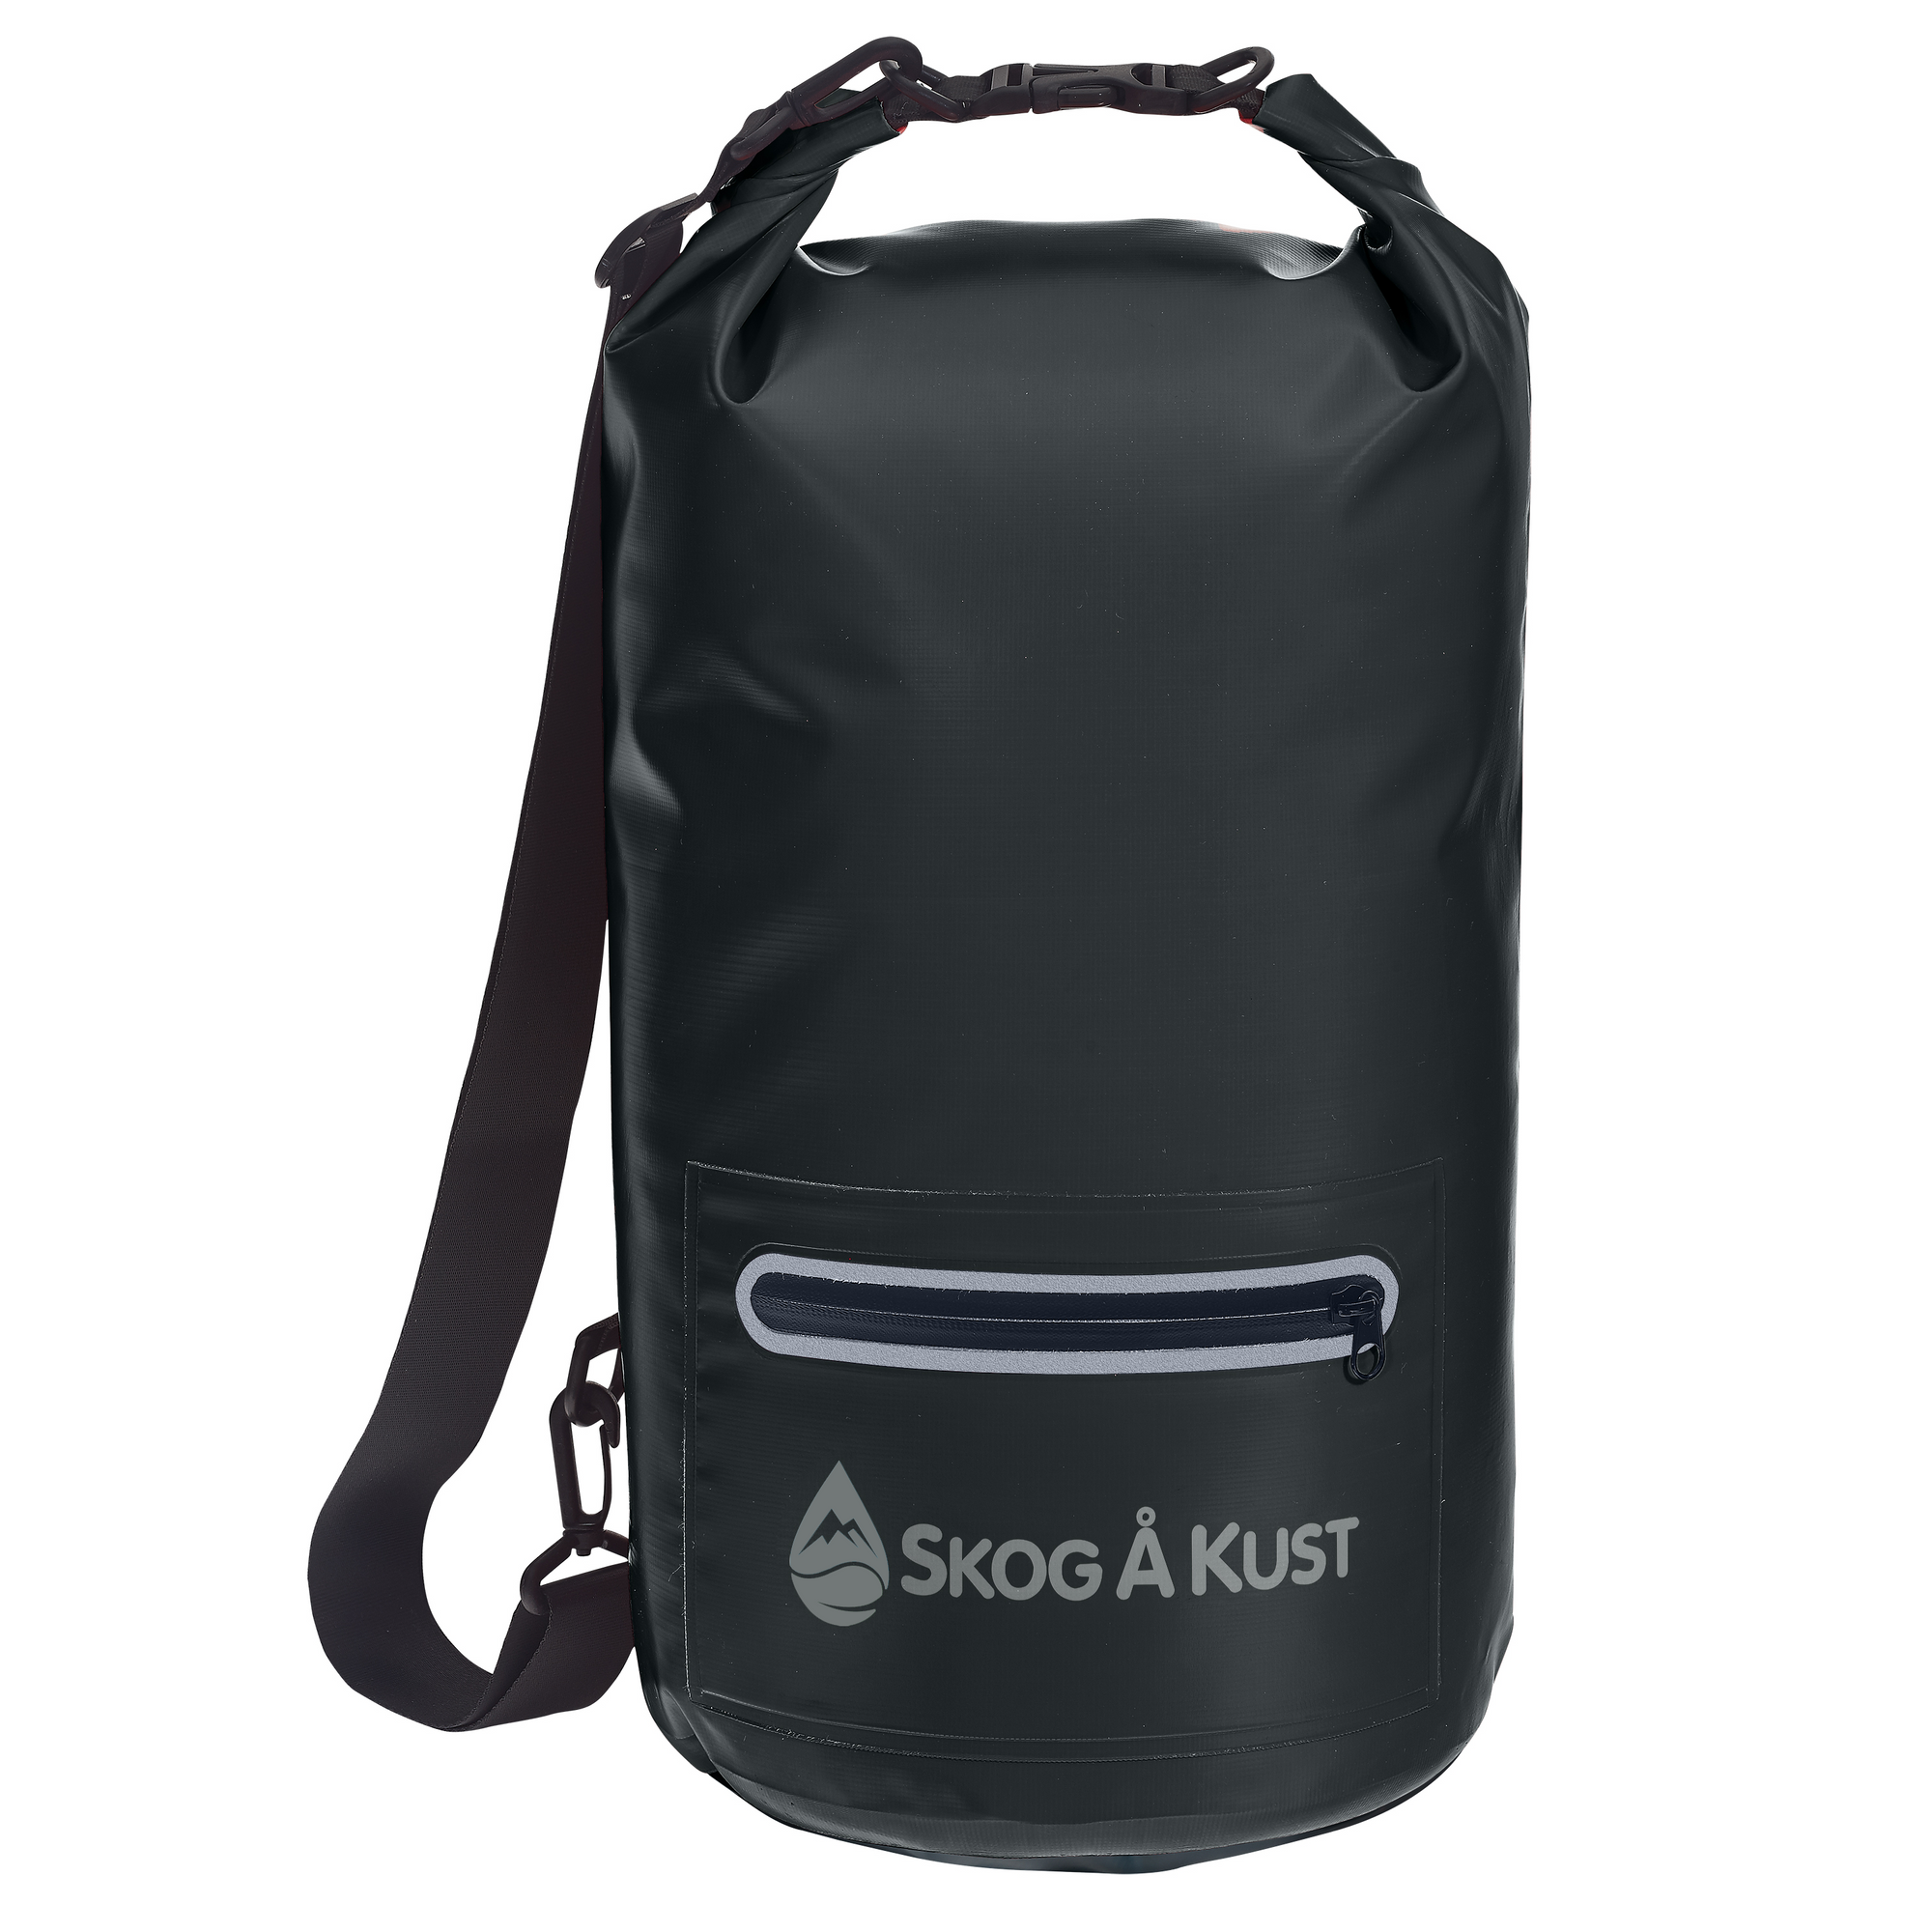 Skog Kust DrySk Waterproof Floating Dry Bag with Exterior Zippered Pocket